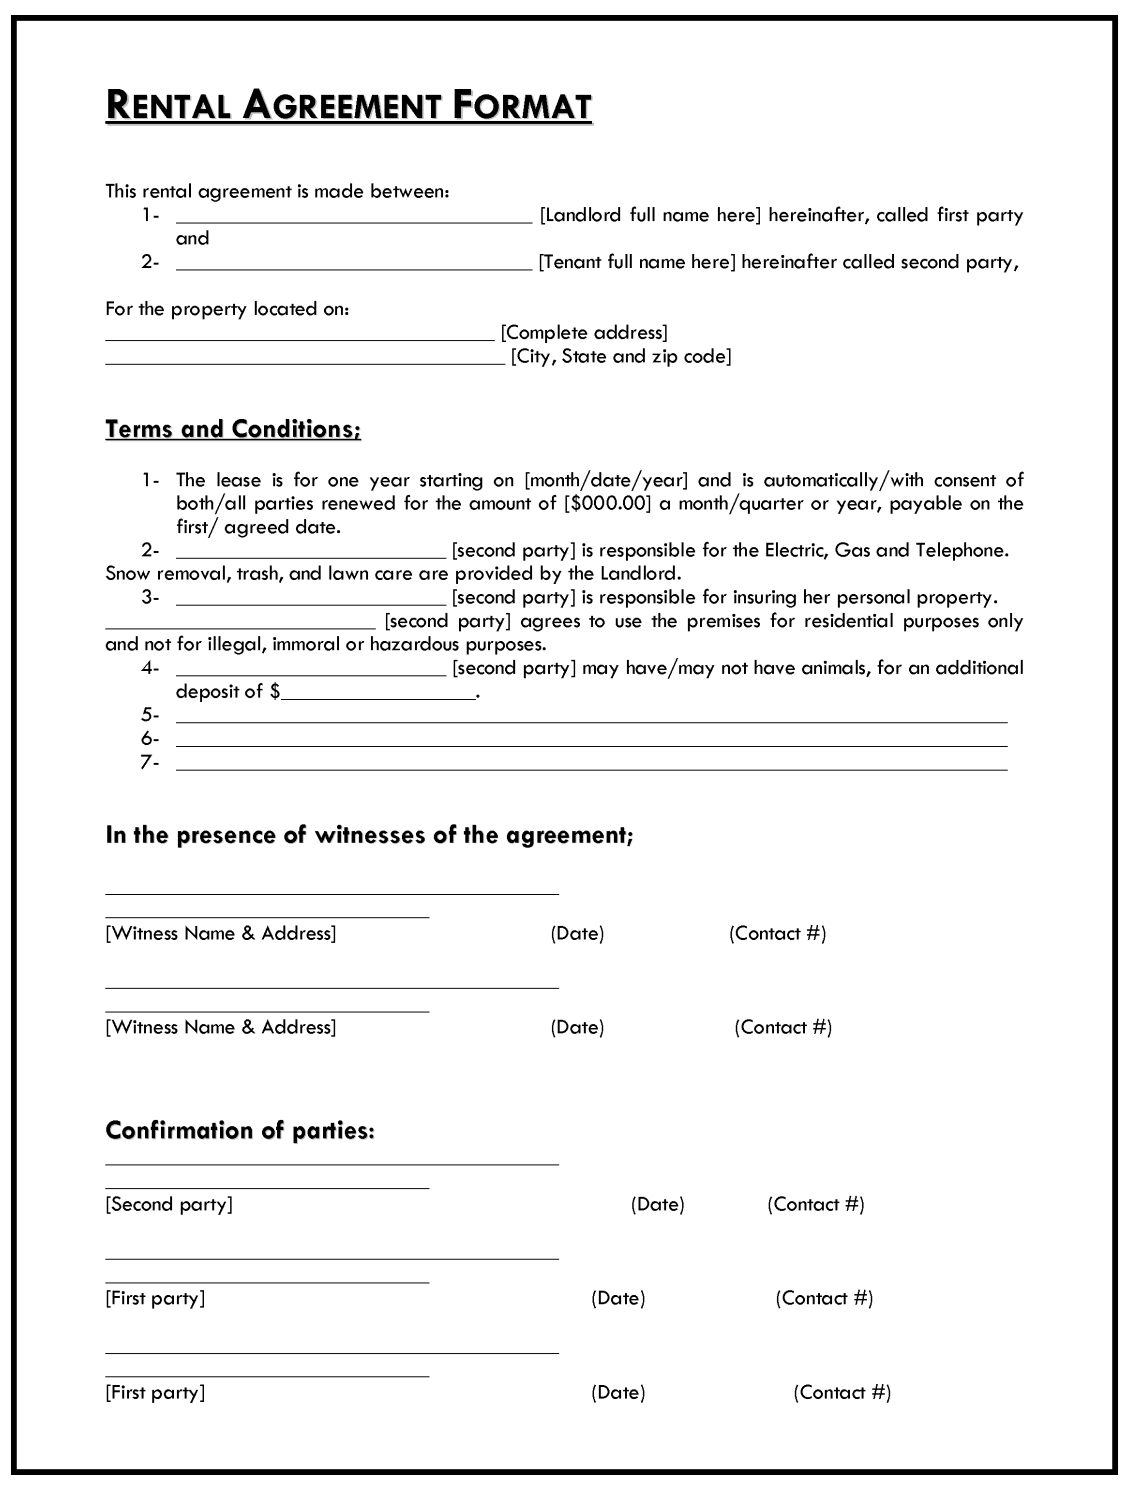 Sample Rental Agreement Format Template